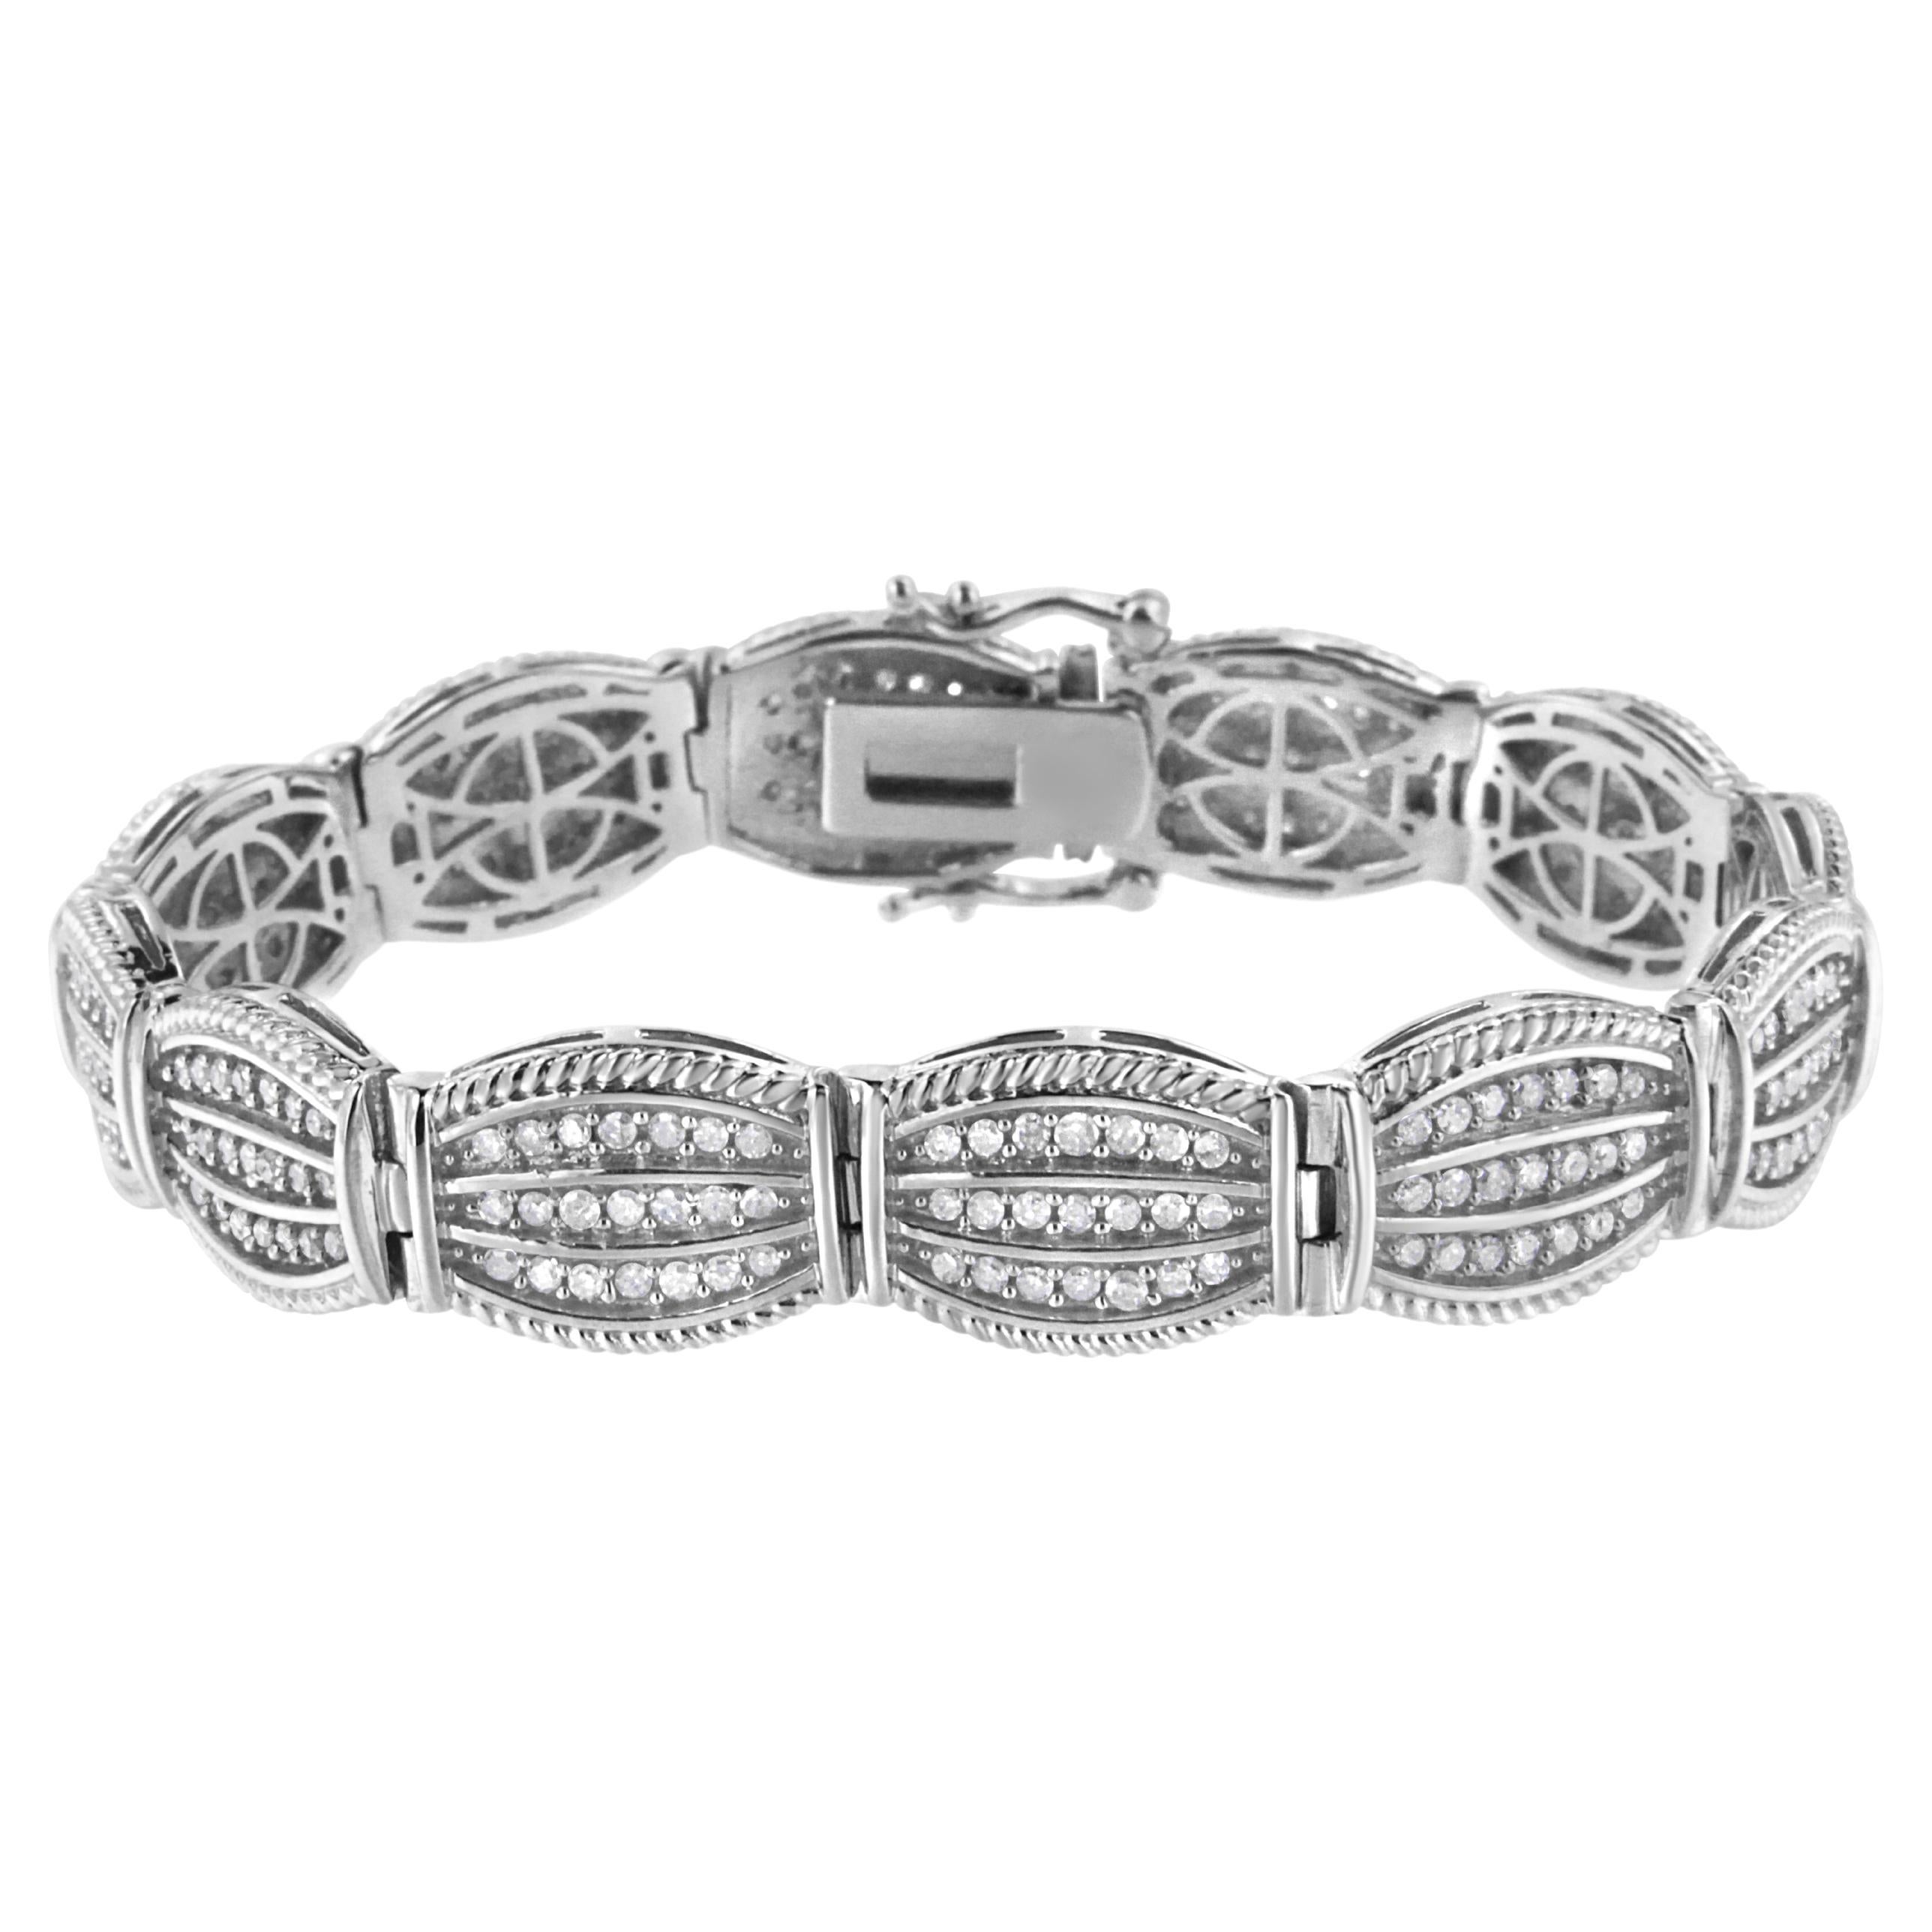 .925 Sterling Silver 3.0 Carat Prong Set Diamond Art Deco Style Tennis Bracelet